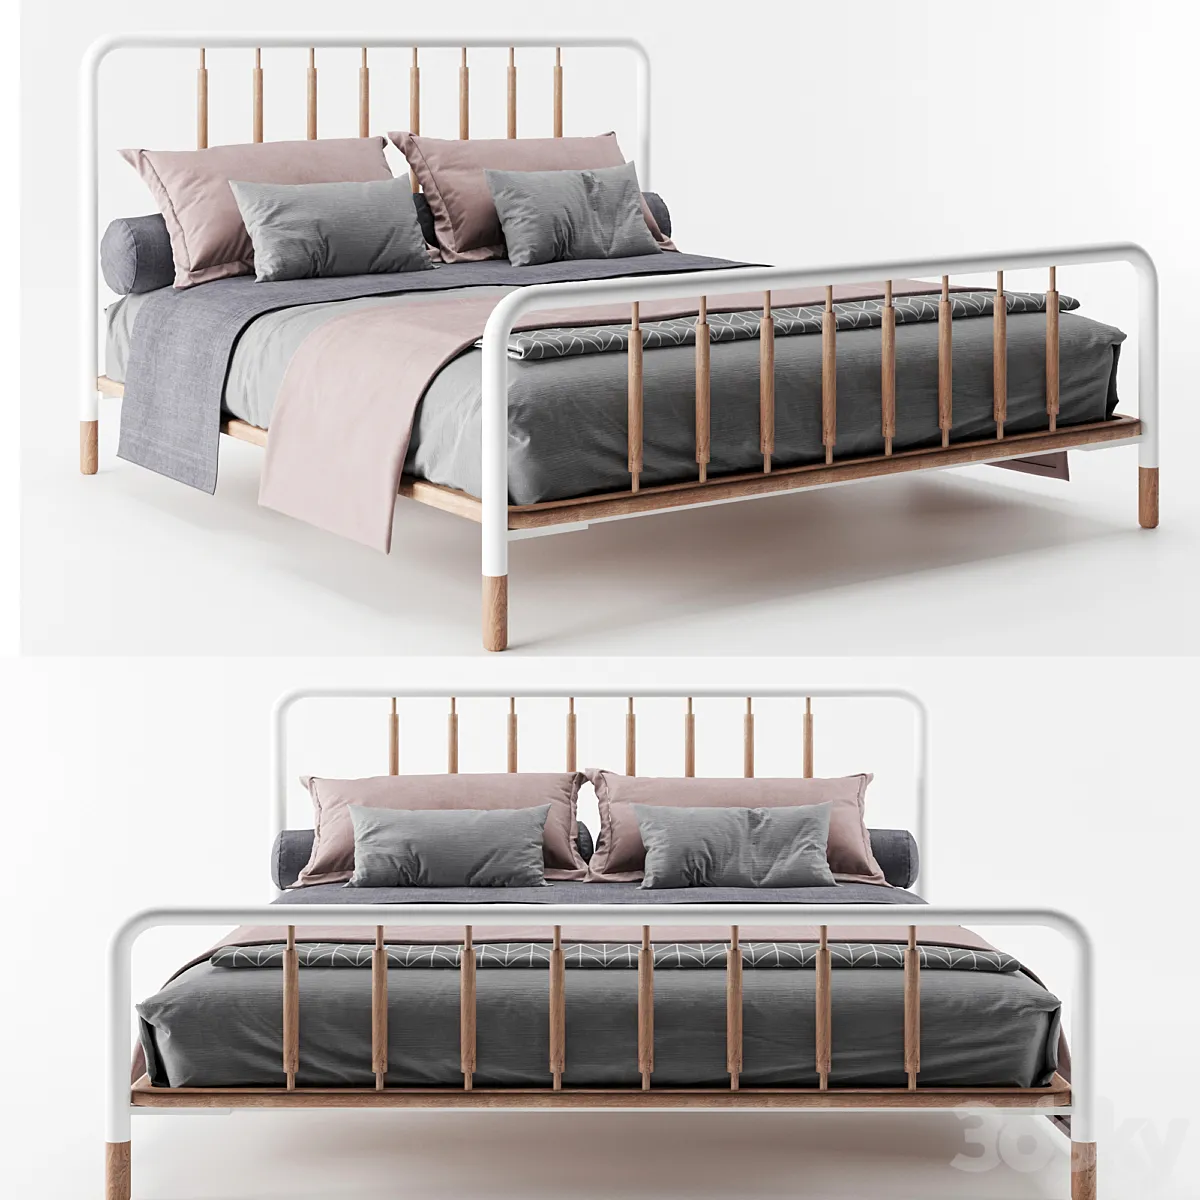 Sefkat yatak - Bed - 3D model